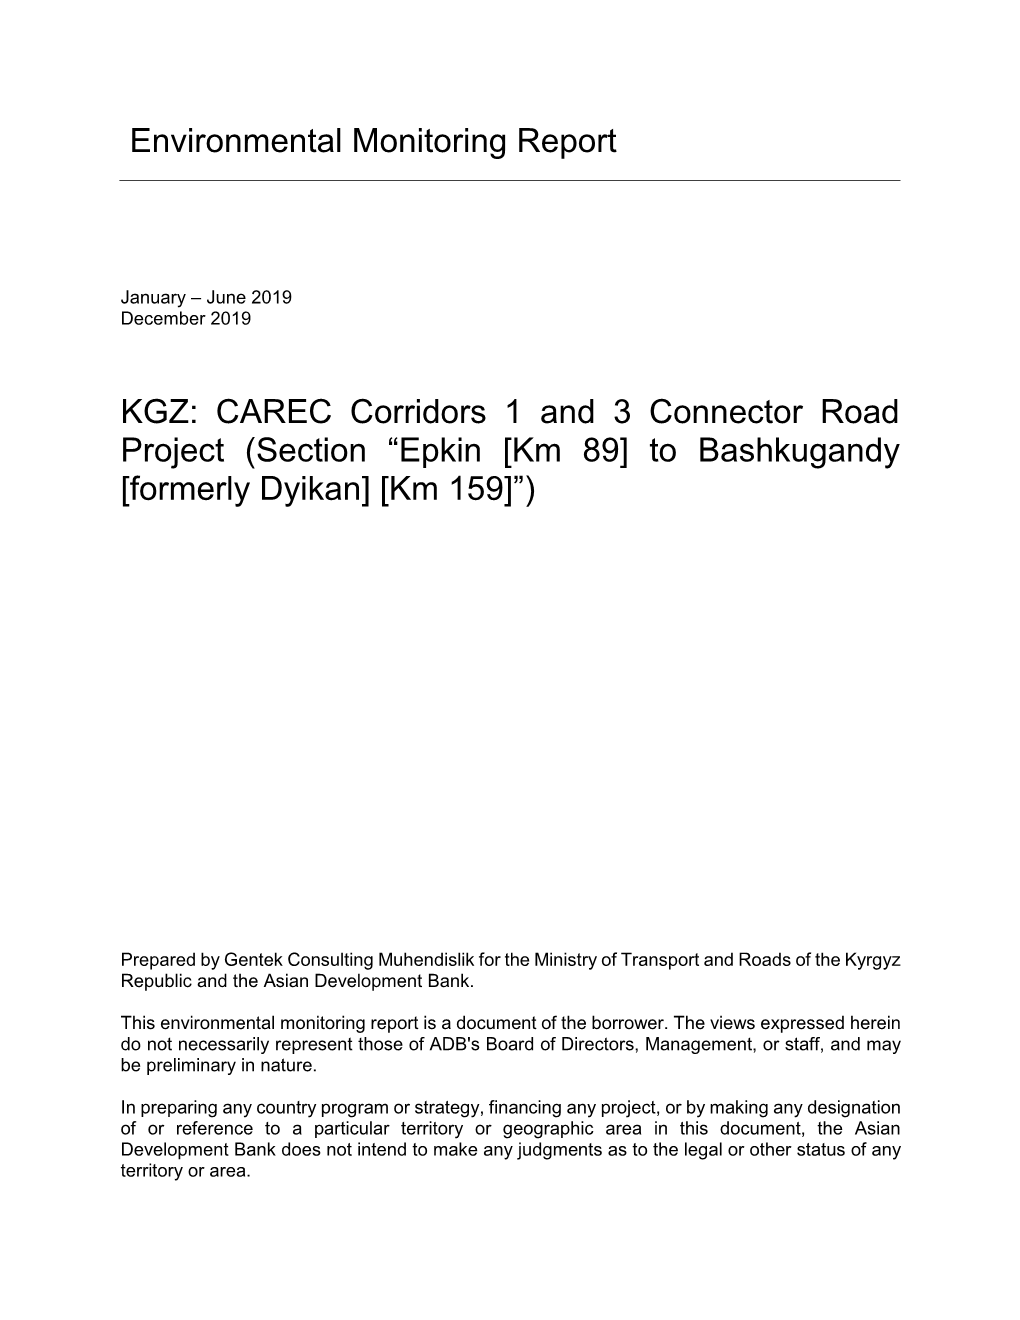 48401-007: CAREC Corridors 1 and 3 Connector Road Project